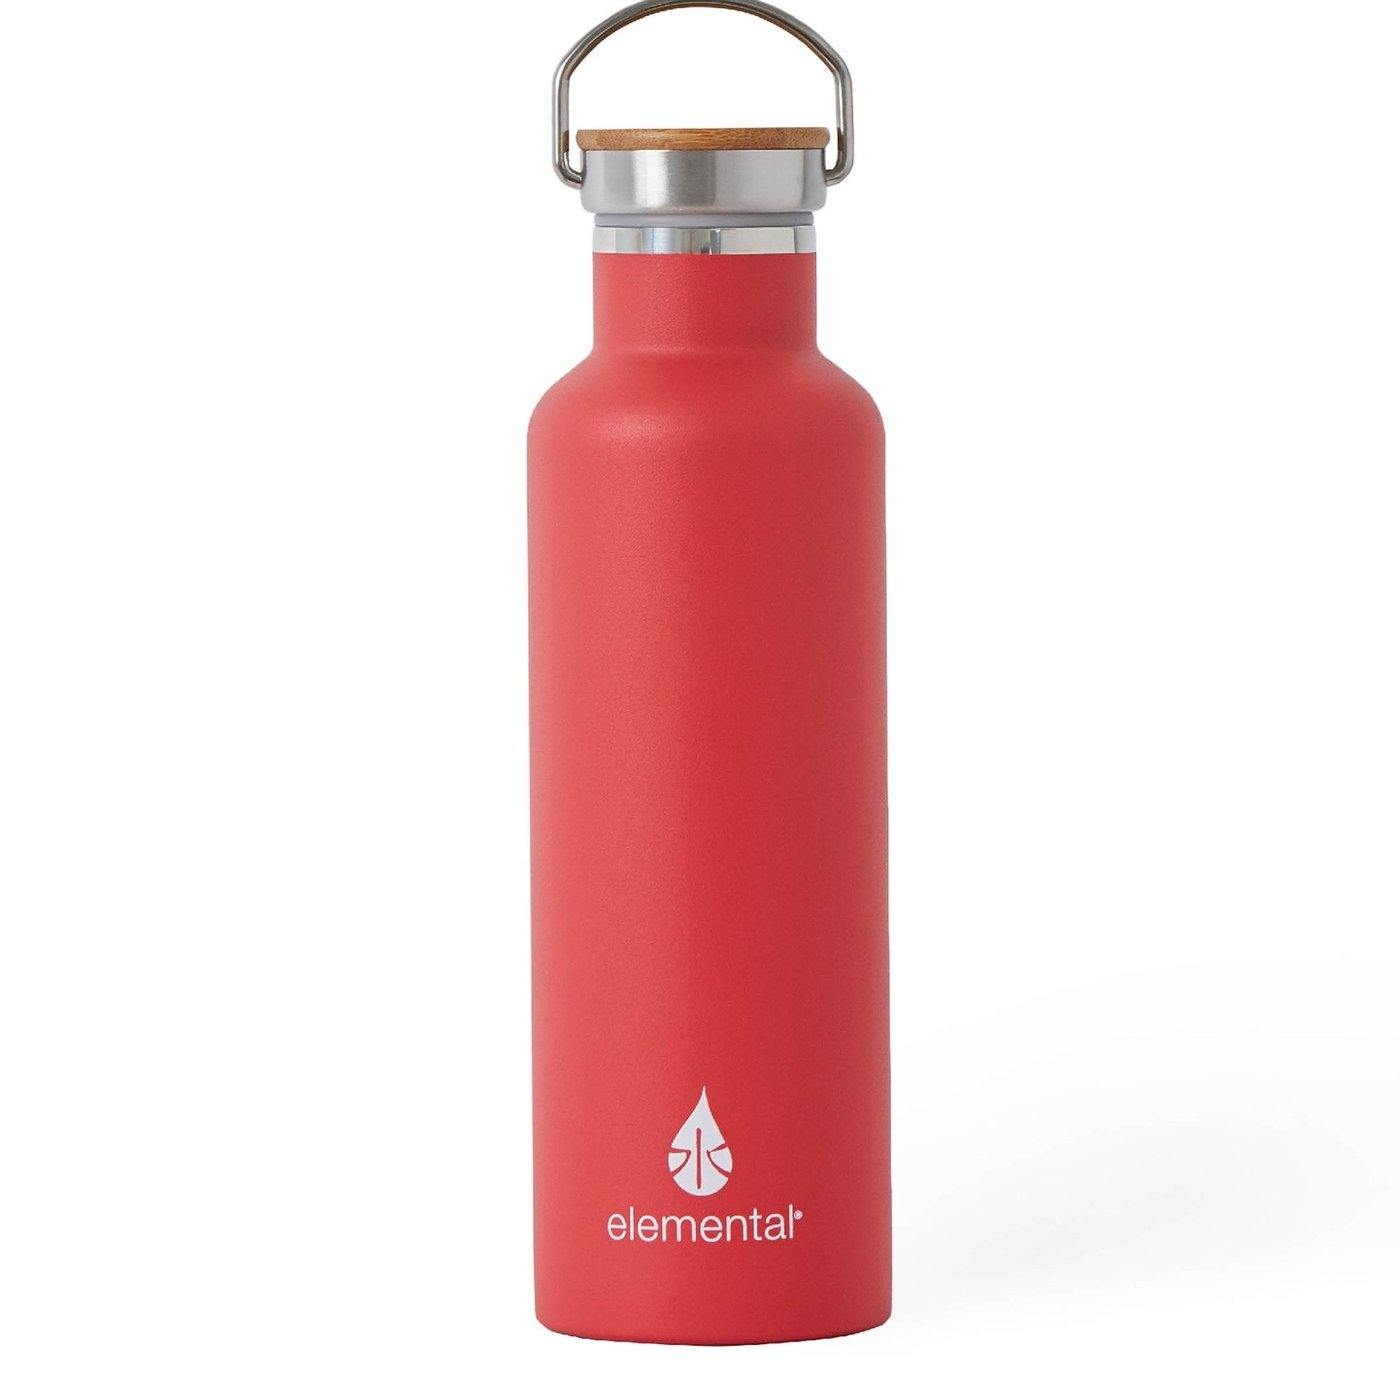 25oz Red Stainless Steel Elemental Water Bottle